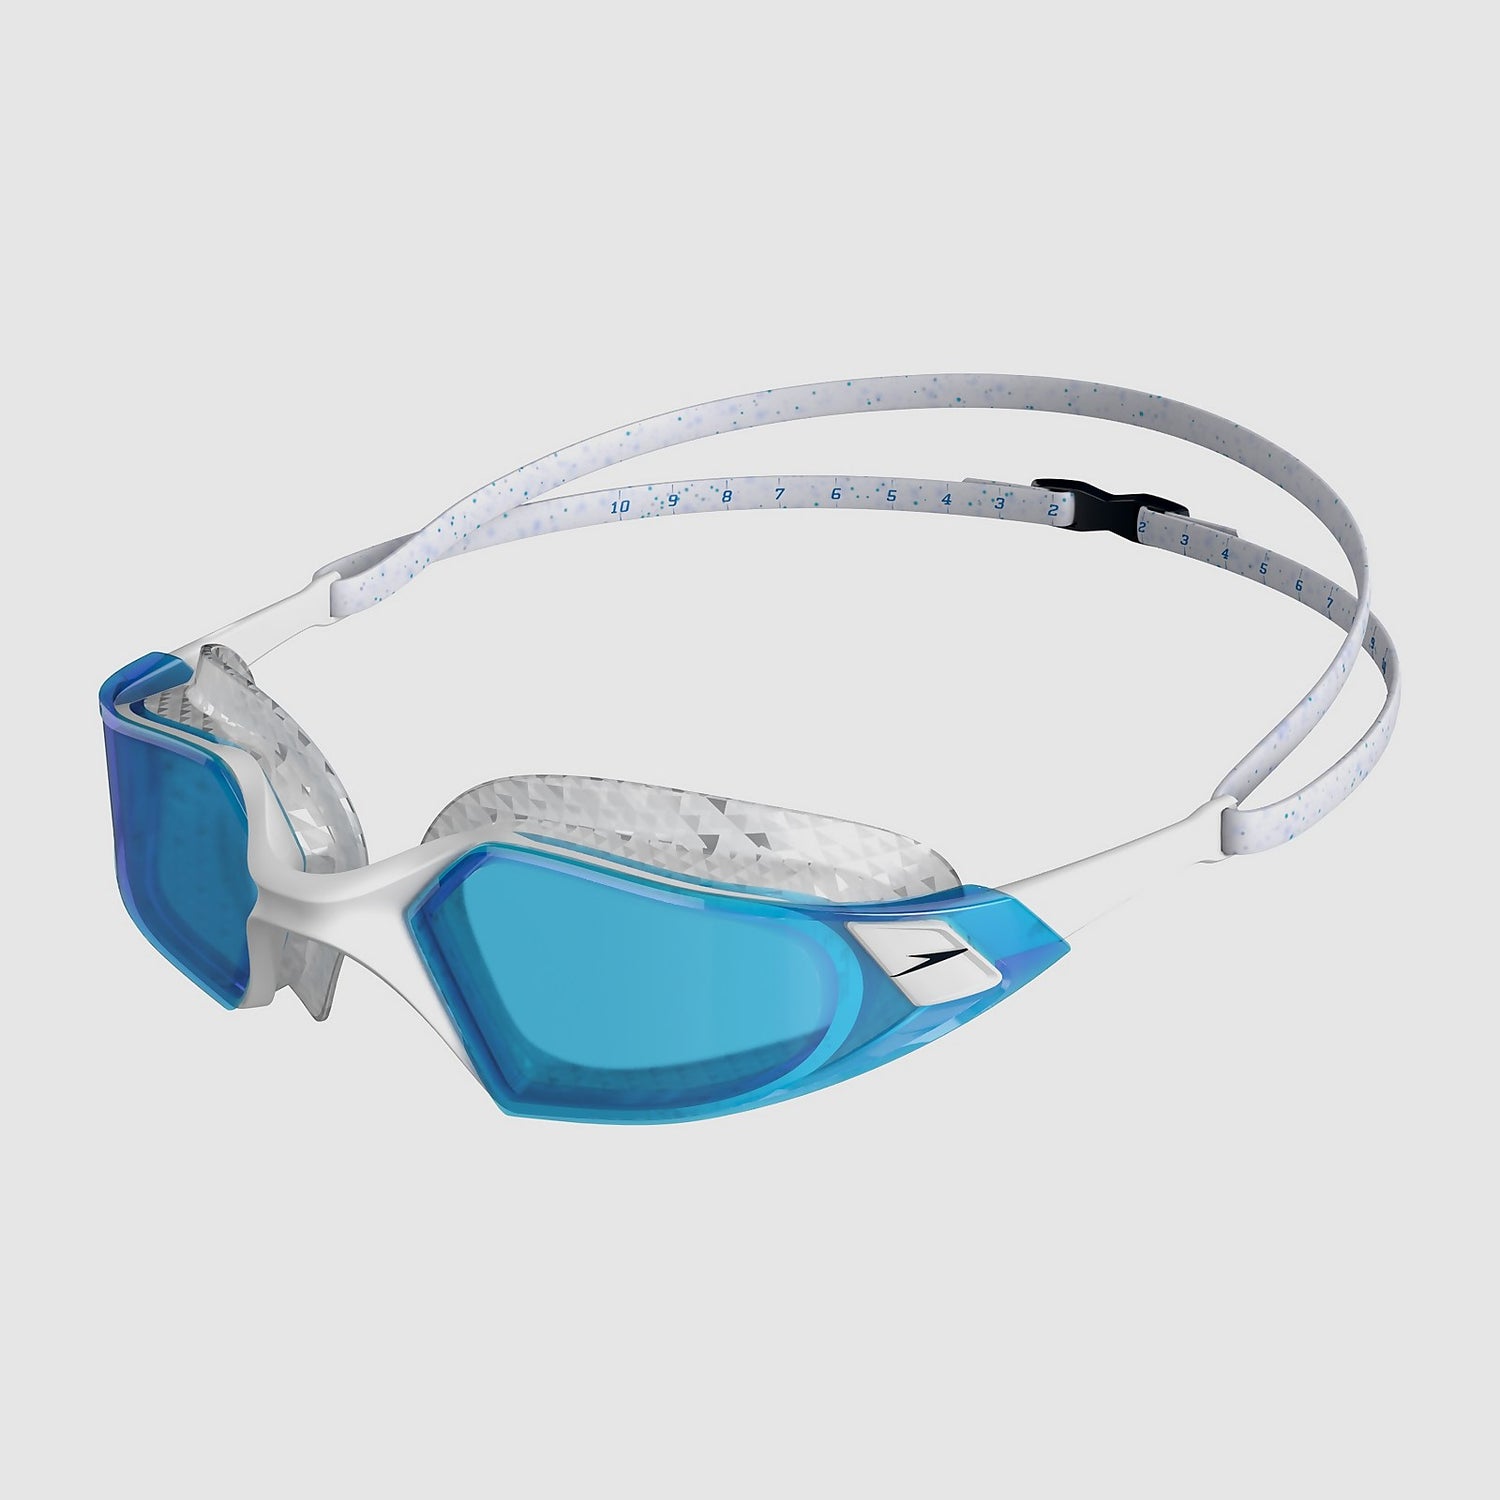 Speedo - Gafas de natación unisex para adulto